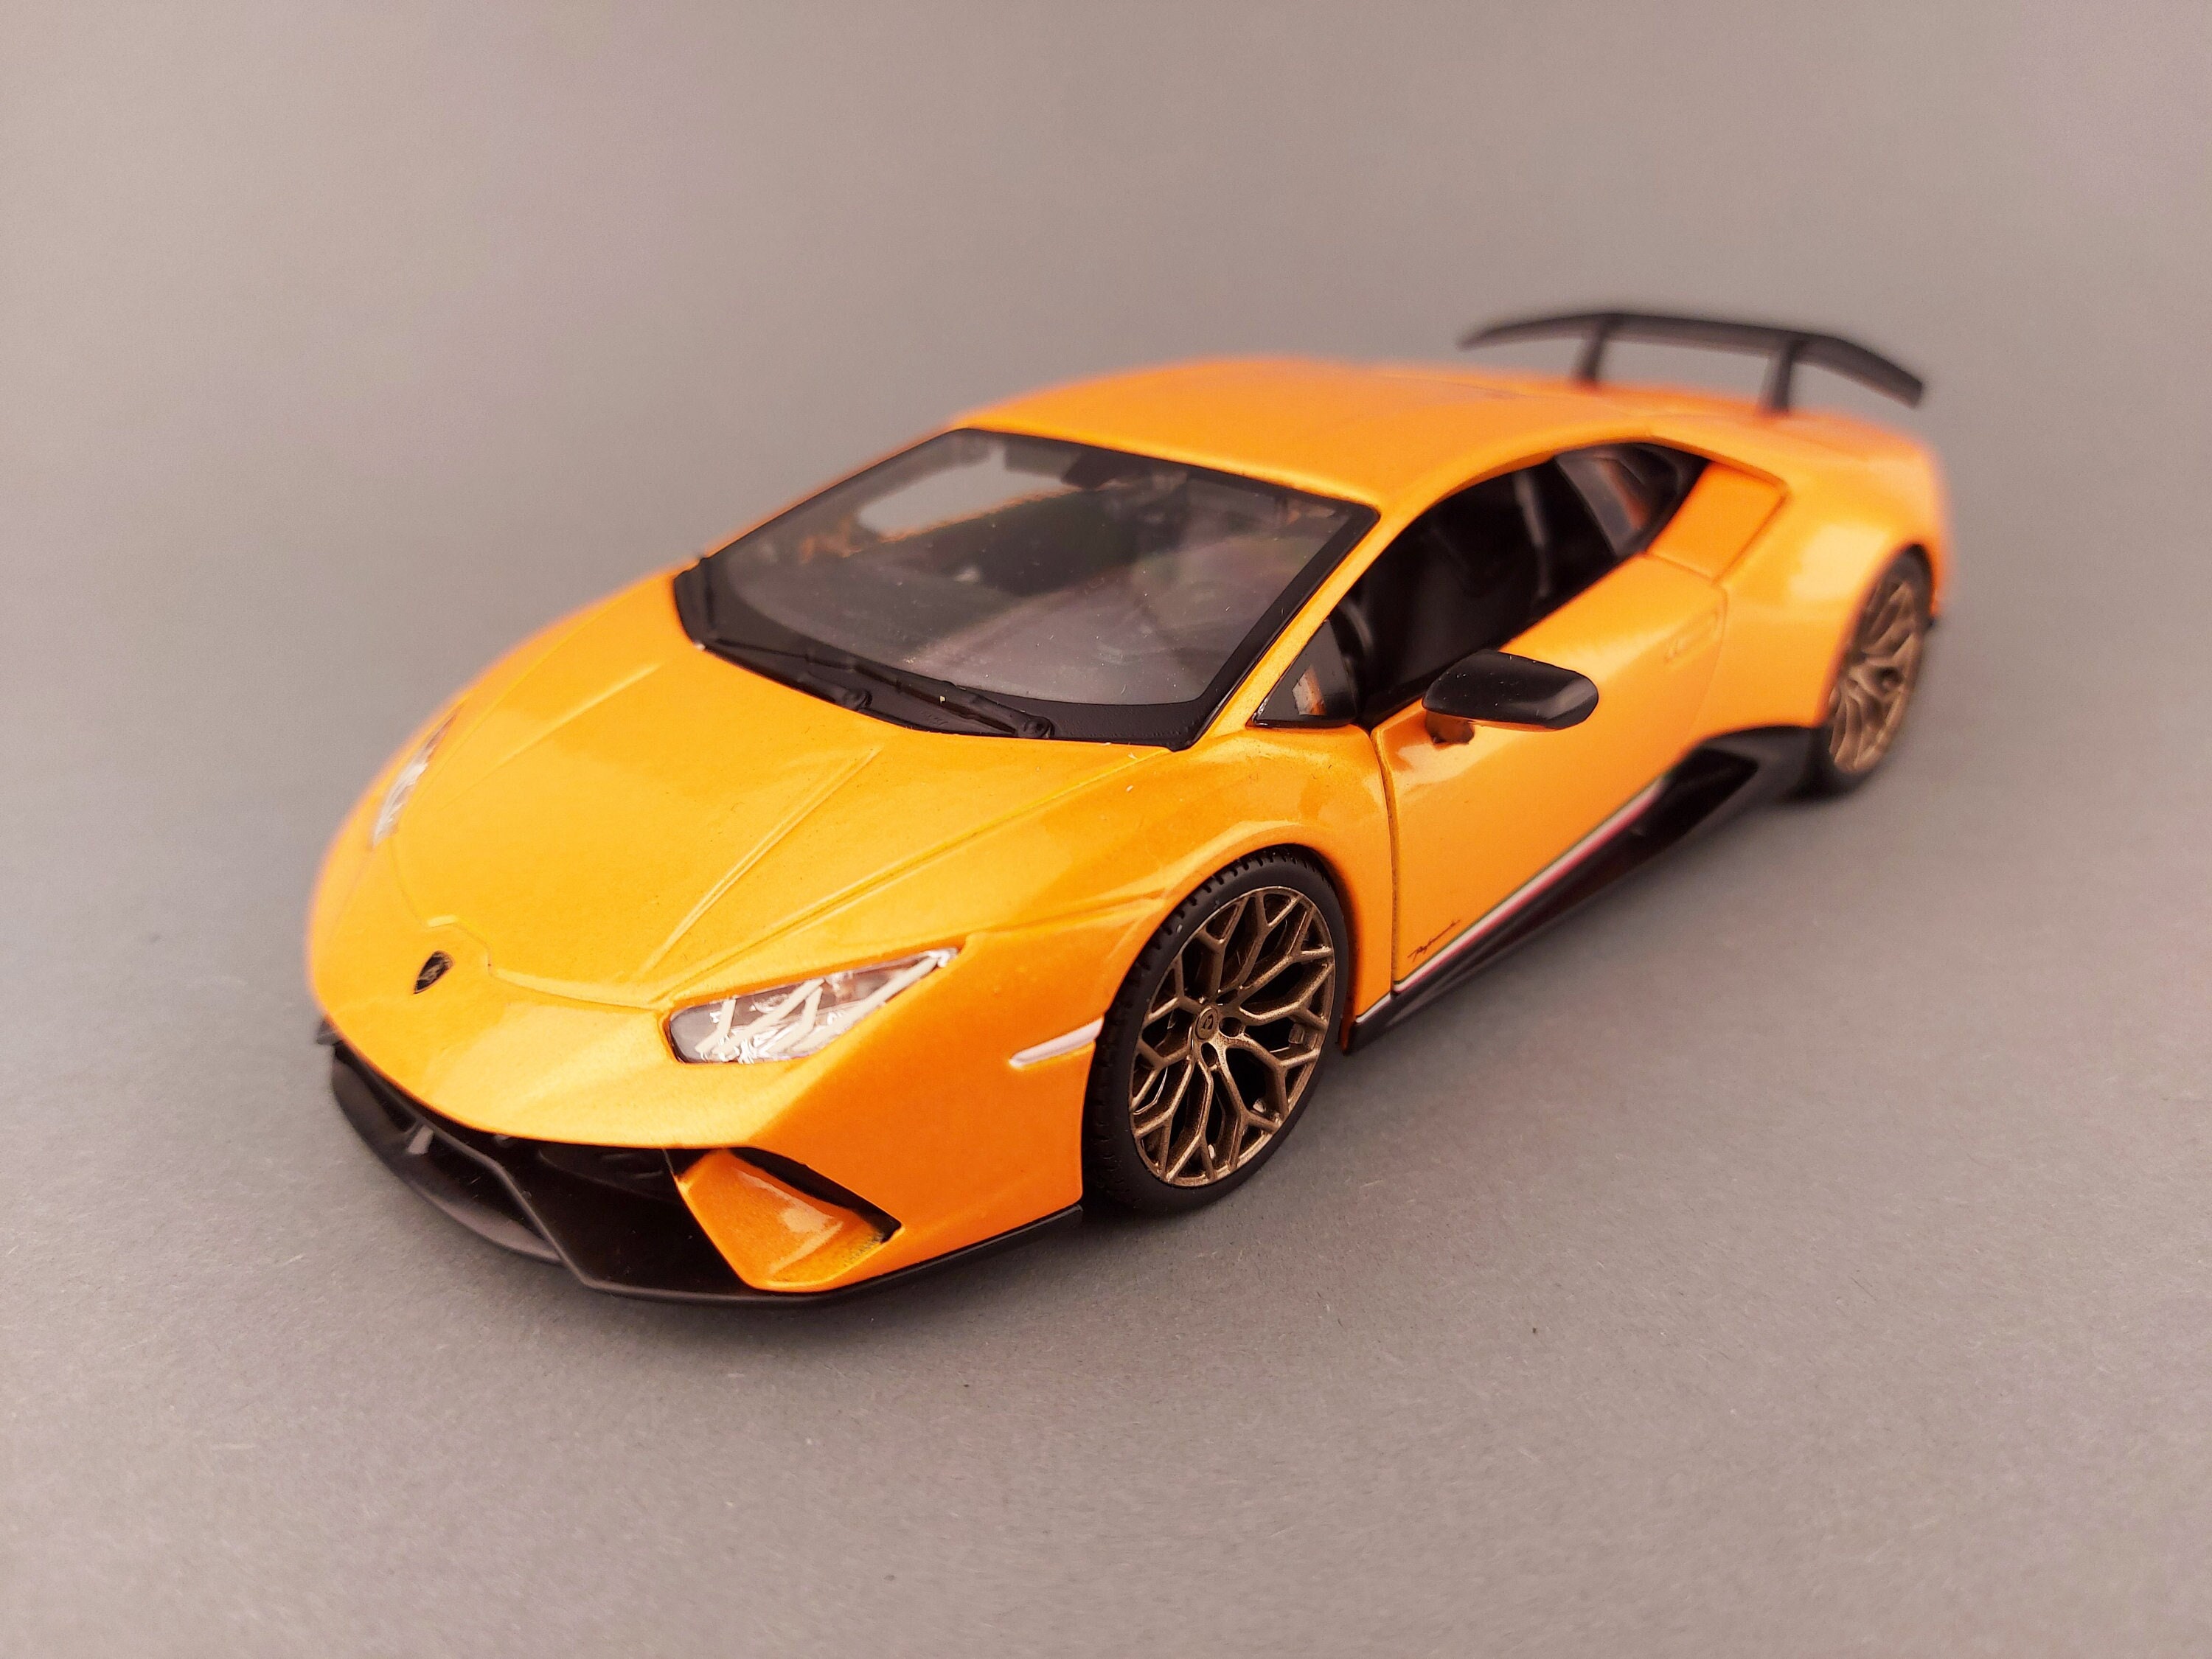 Burago 1:24 Lamborghini Sian FKP 37: Collectible Die Cast Model Car for  Kids & Adults